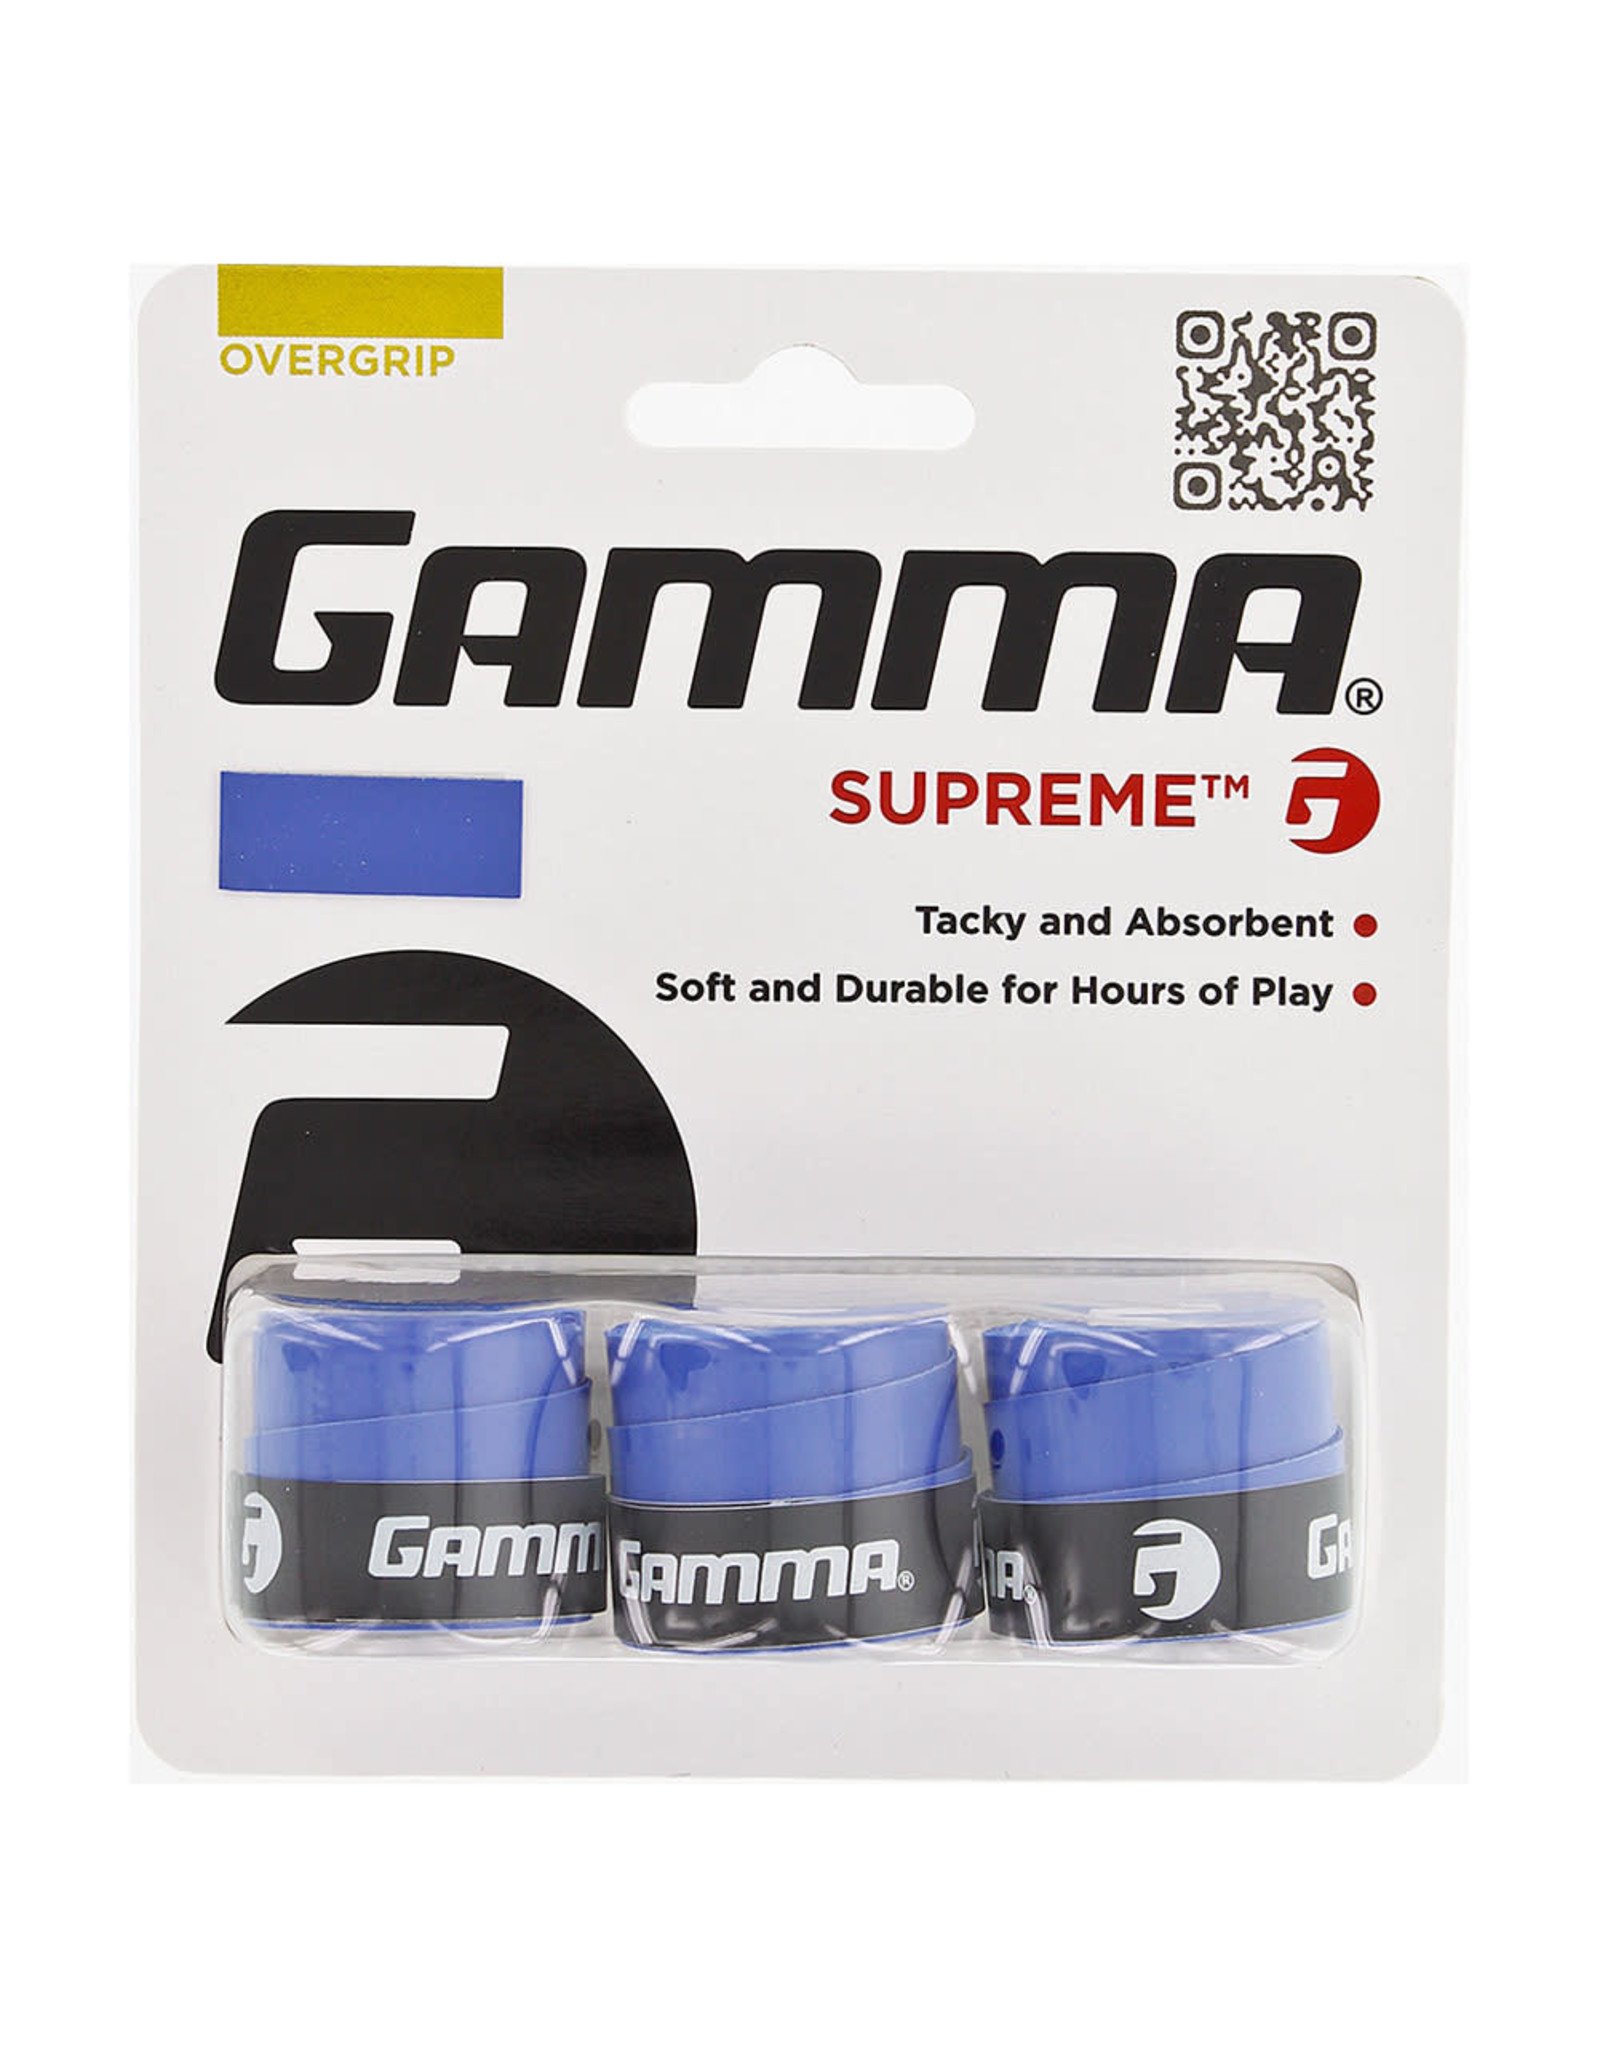 Gamma Gamma Supreme Overgrip